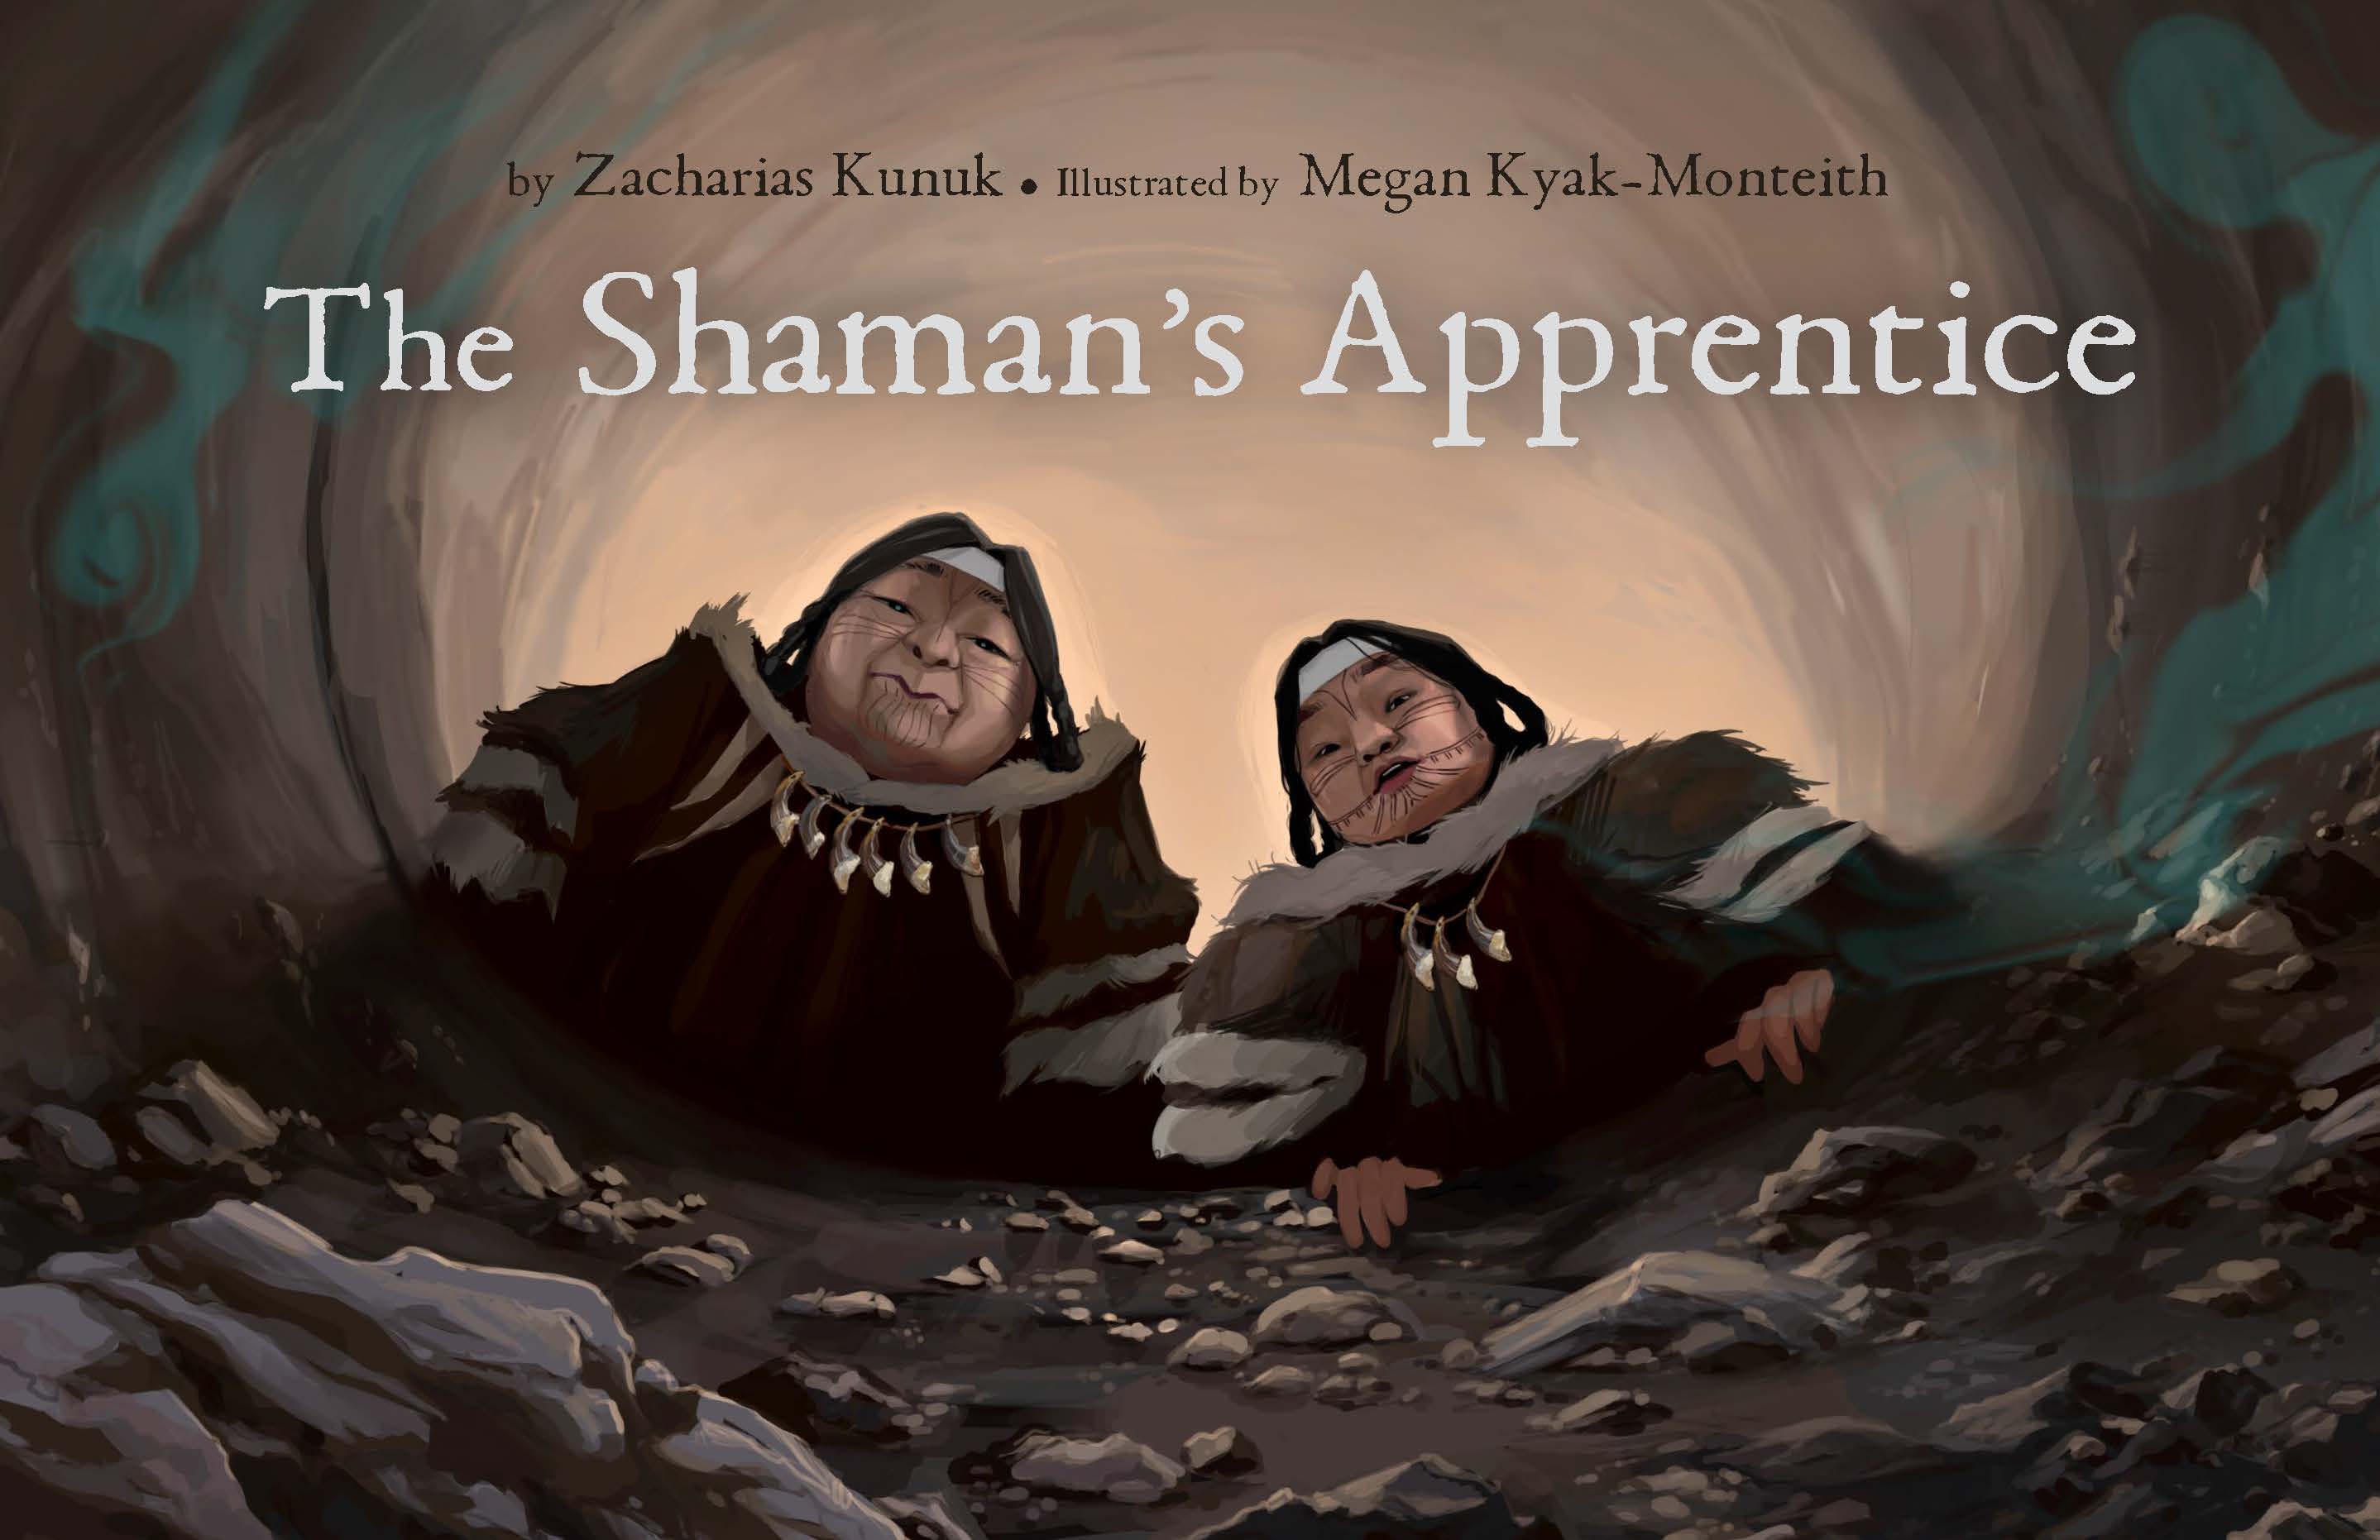 The cover of Zacharias Kunuk and Megan Kyak-Monteith's The Shaman's Apprentice